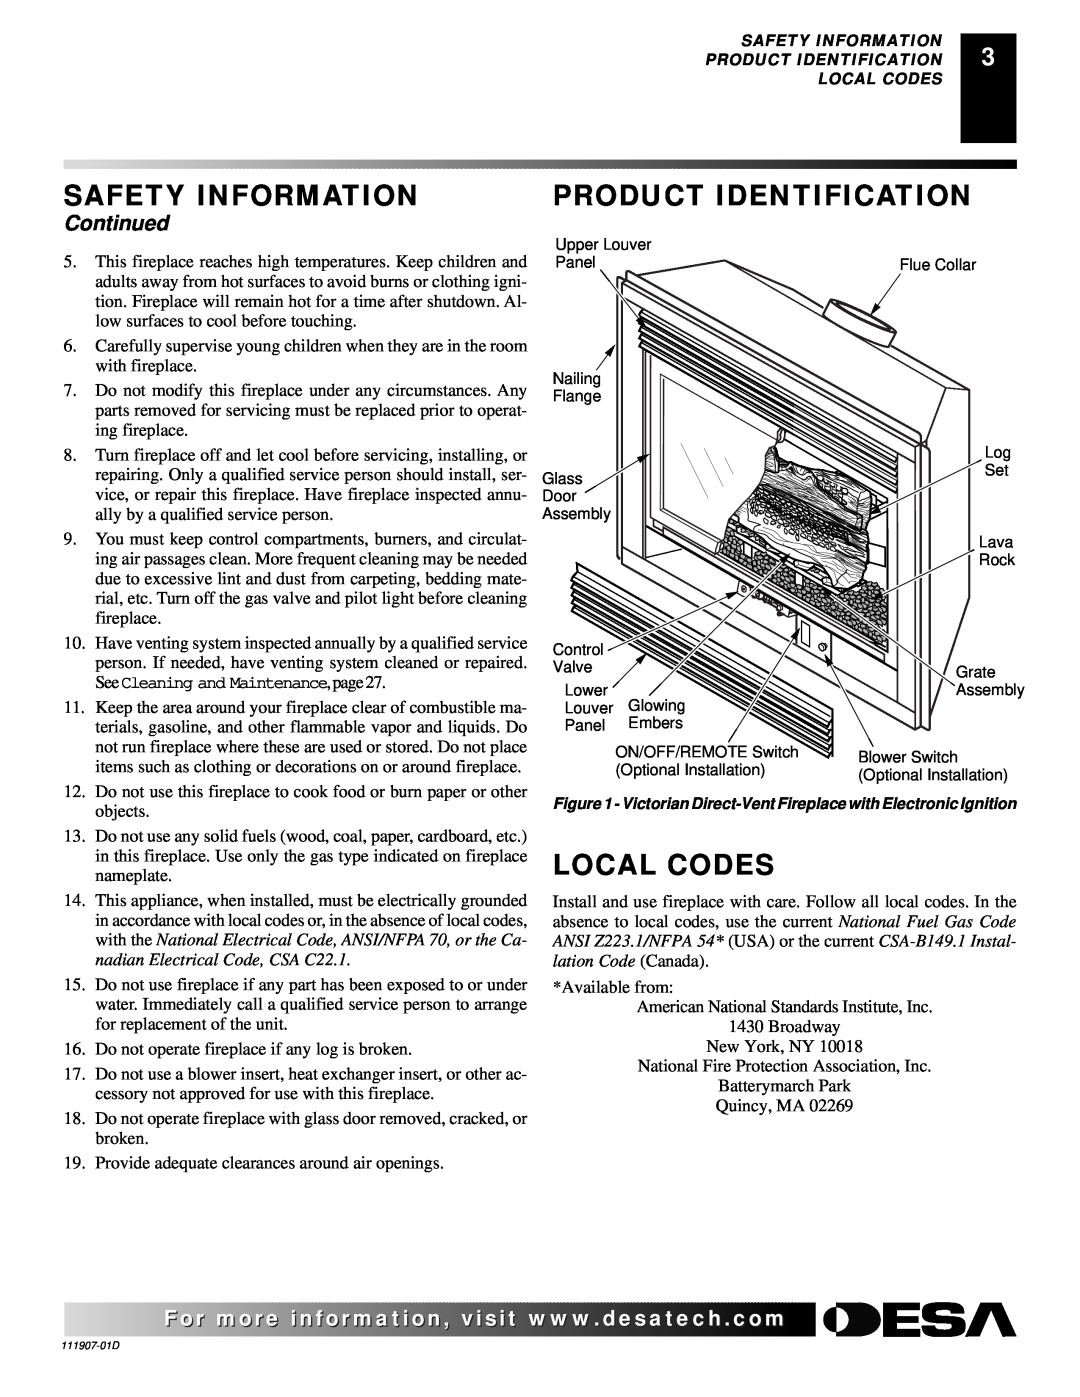 Desa V42EP-A, VV42ENB(1), VV42EPB(1), V42EN-A Product Identification, Local Codes, Continued, Safety Information 